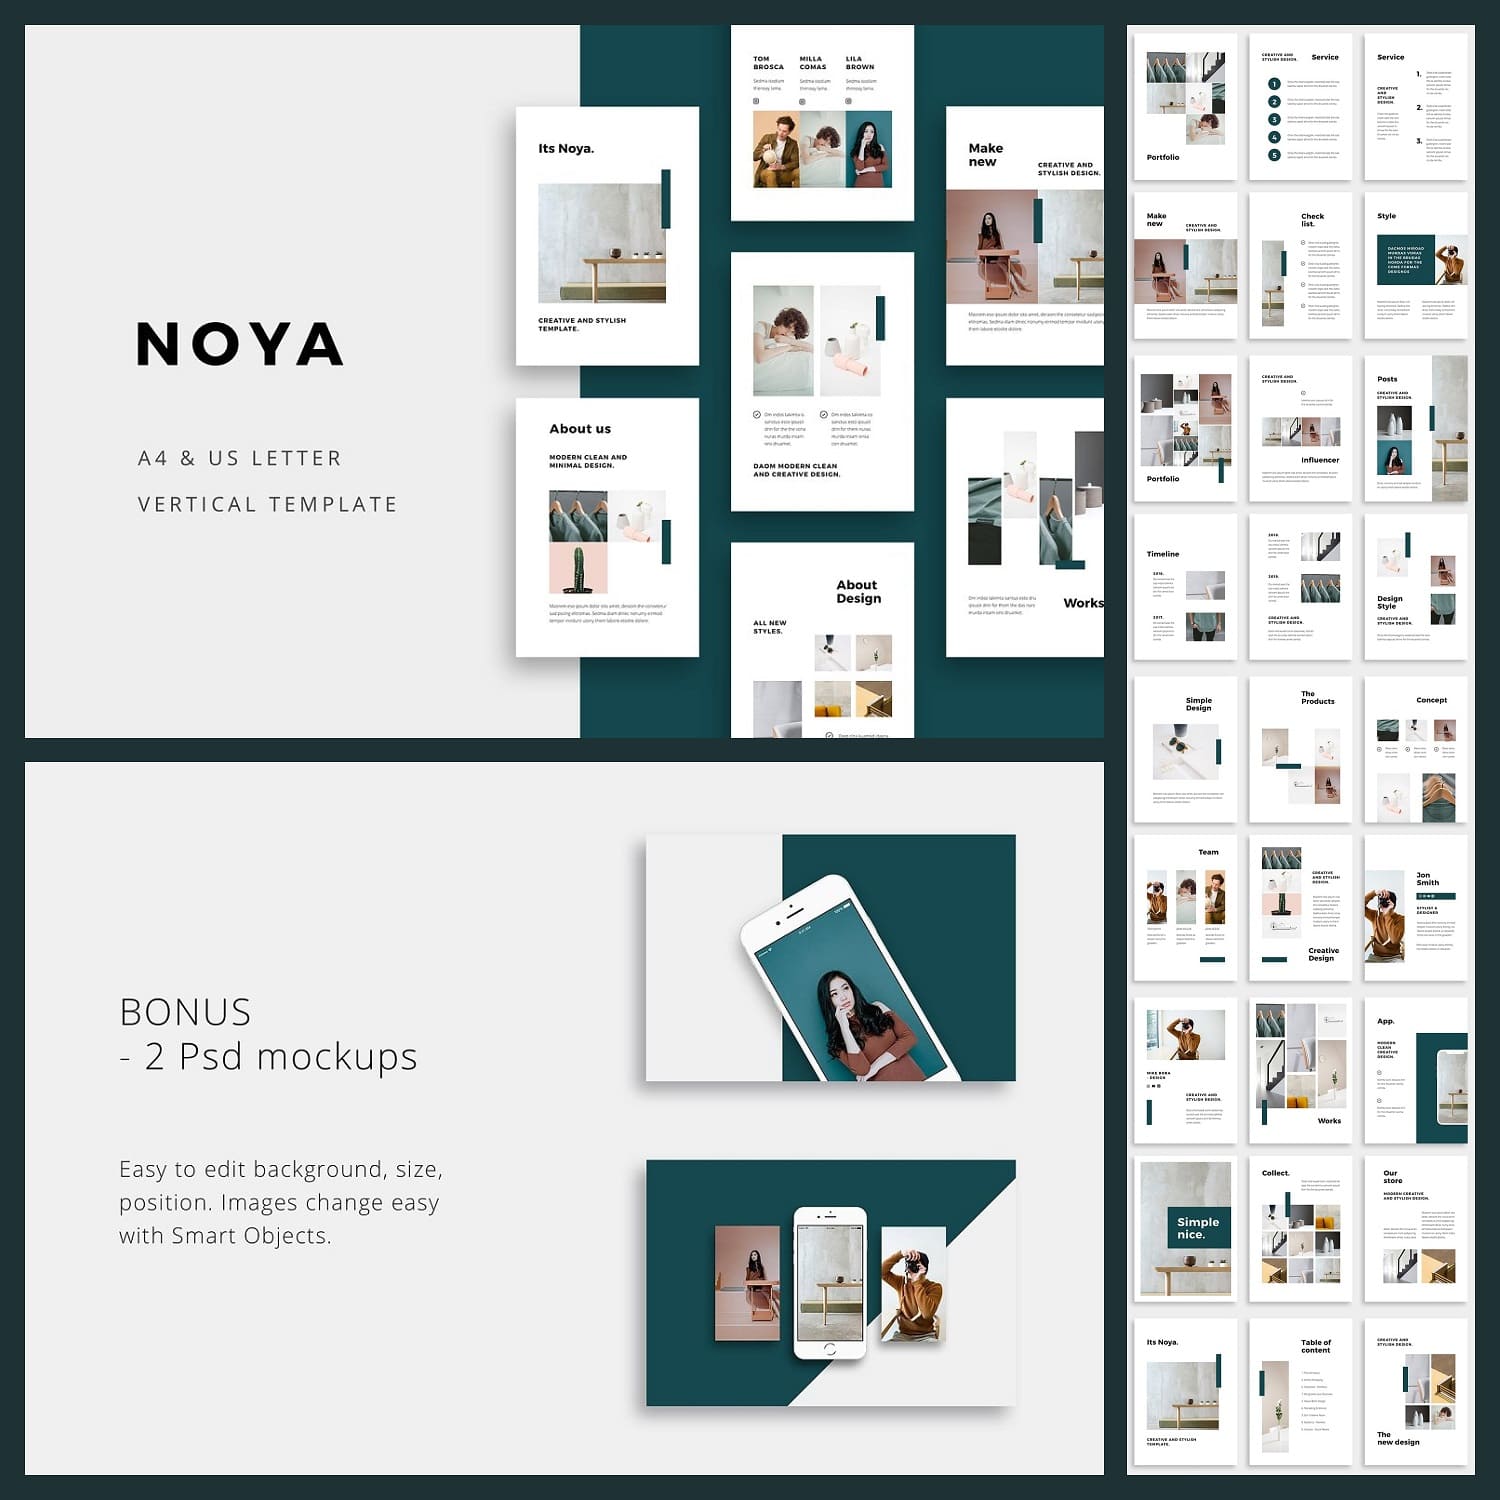 Noya - A4 & US Letter Vertical Template. Bonus - 2 Psd mockups.